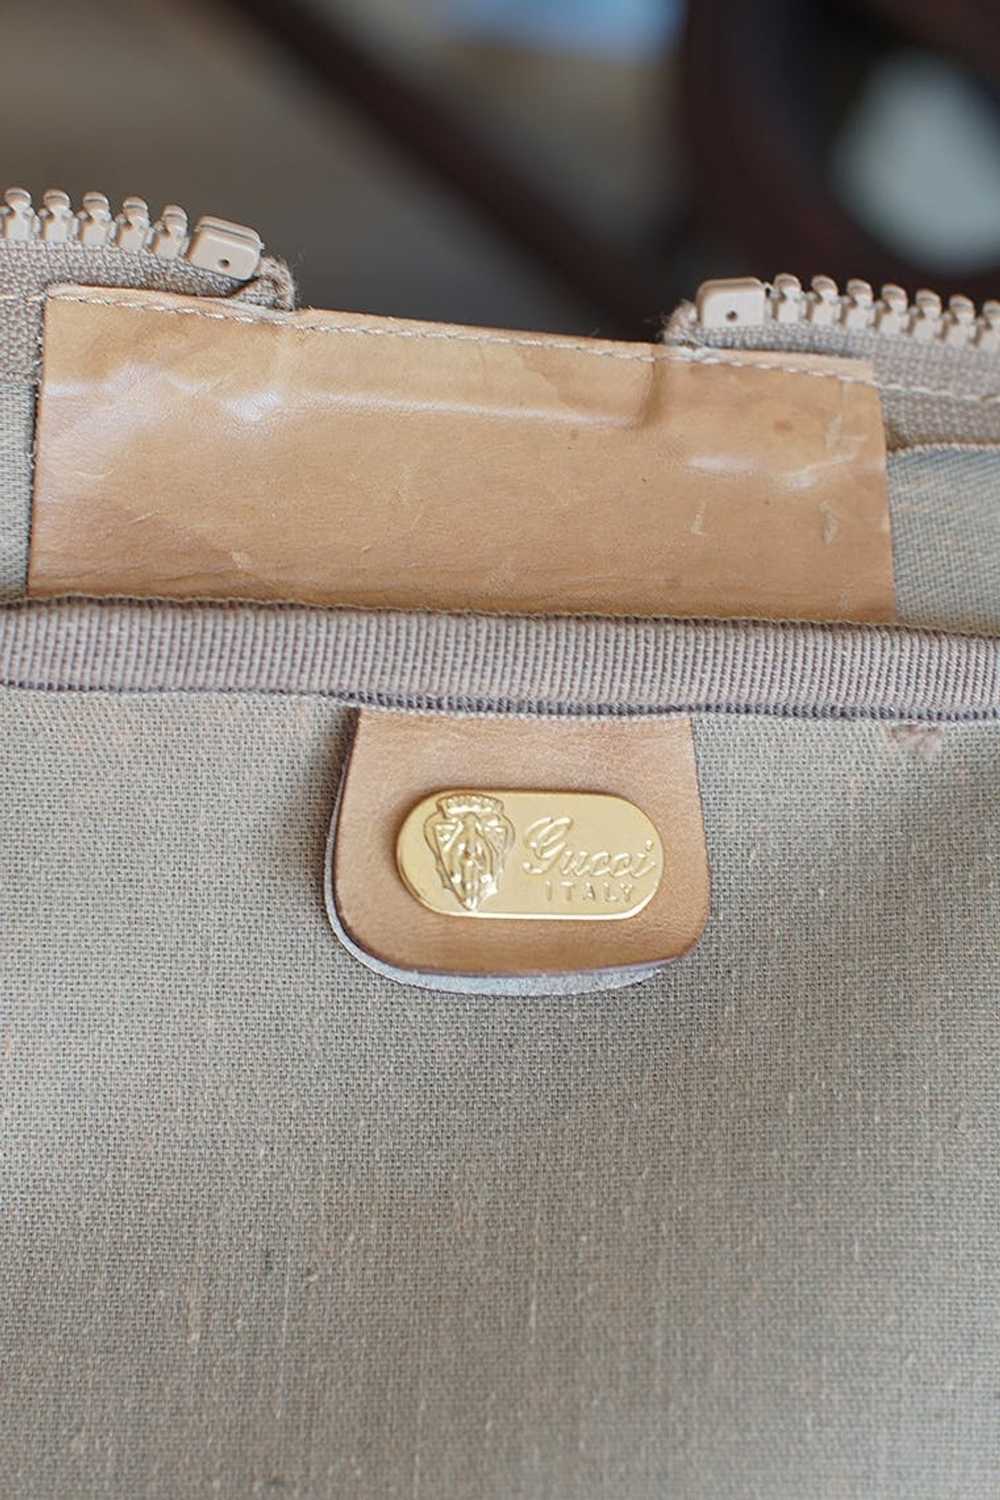 Gucci 60's Suitcase - image 5